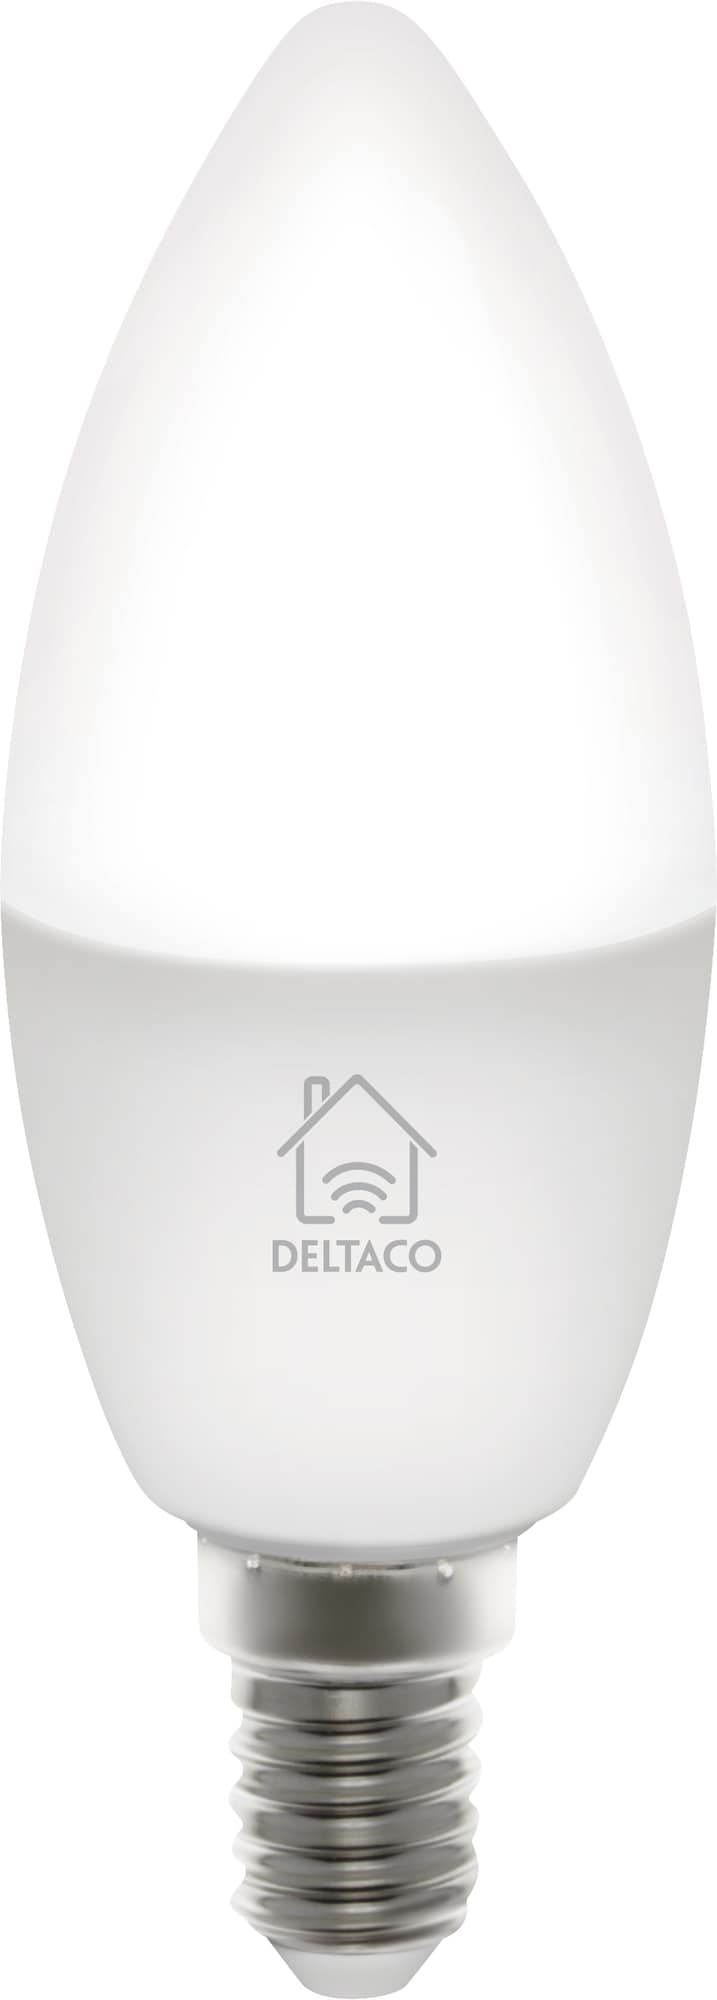 Deltaco E14 smart elpære (hvid) thumbnail